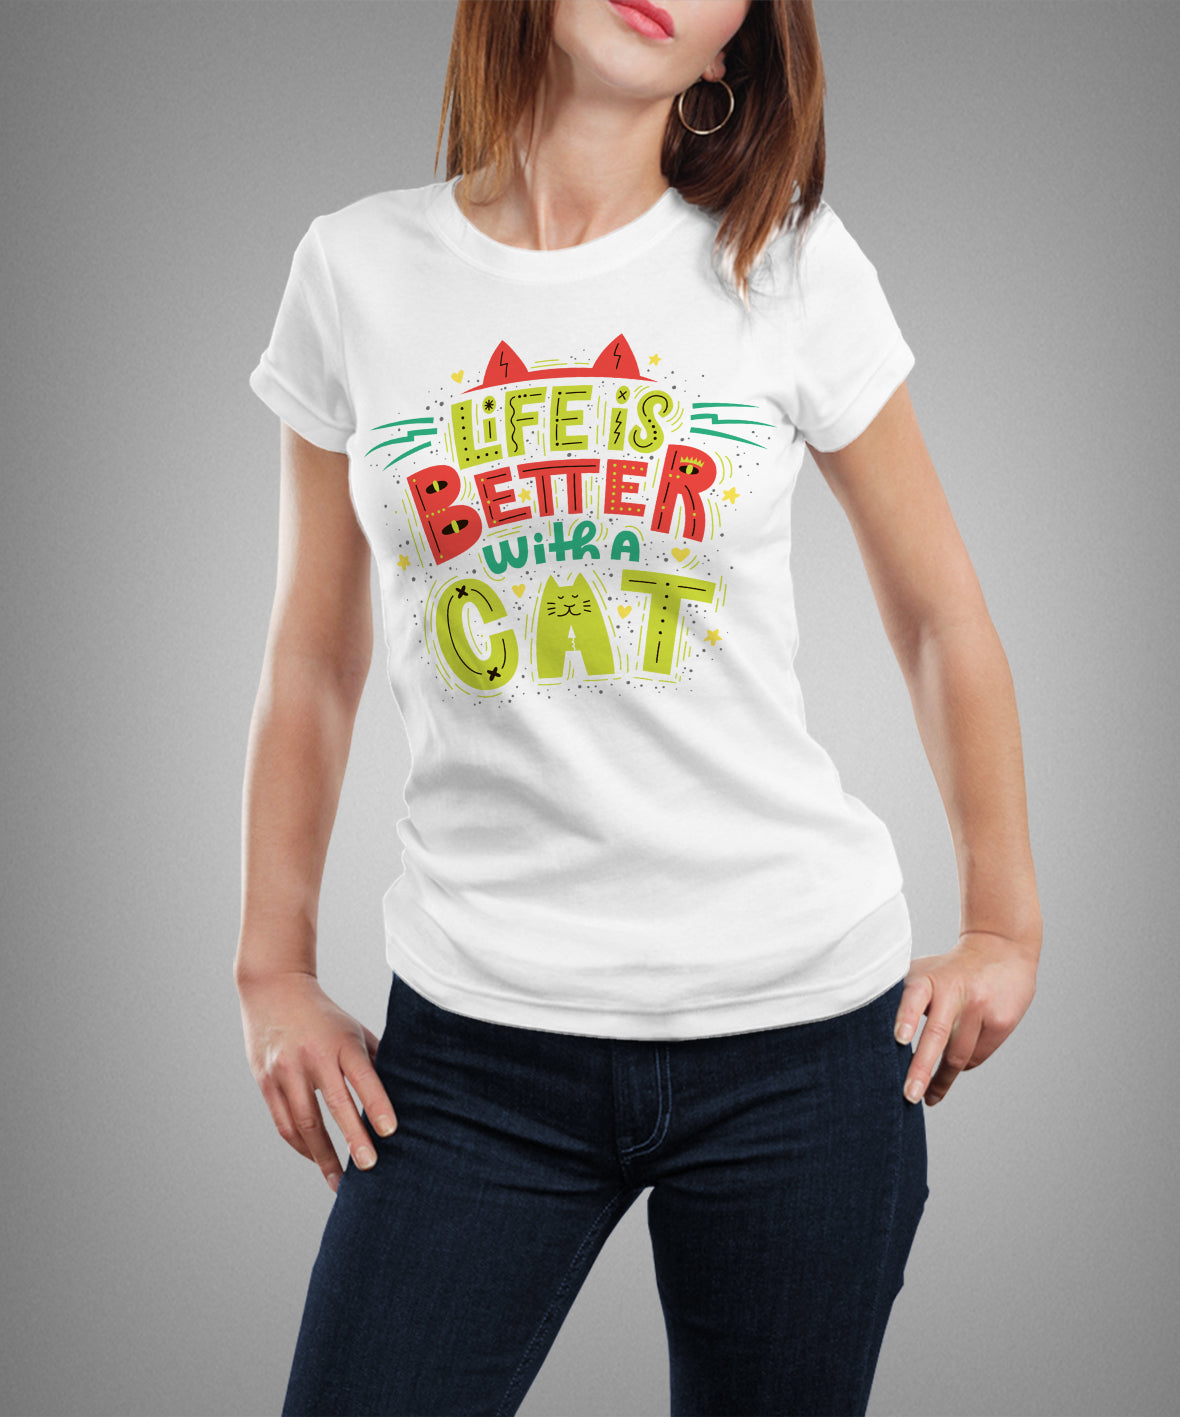 "Love my cat" T-shirts